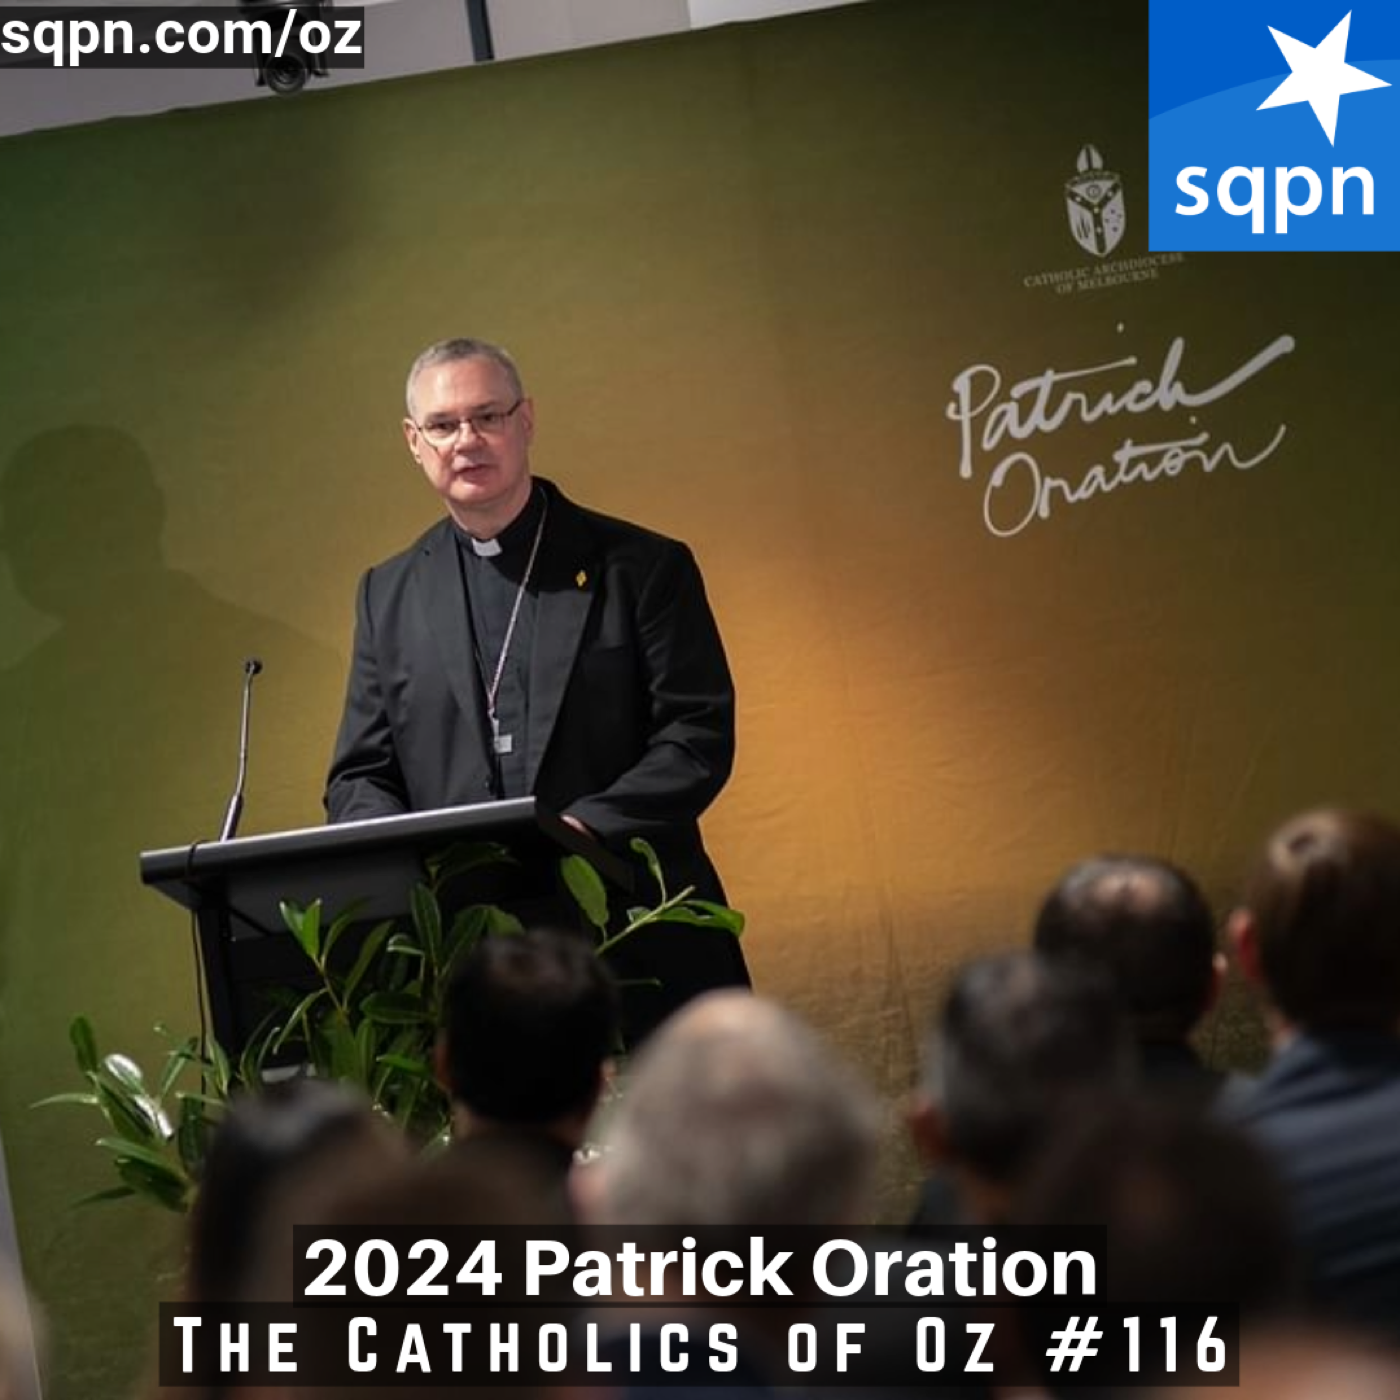 The 2024 Patrick Oration